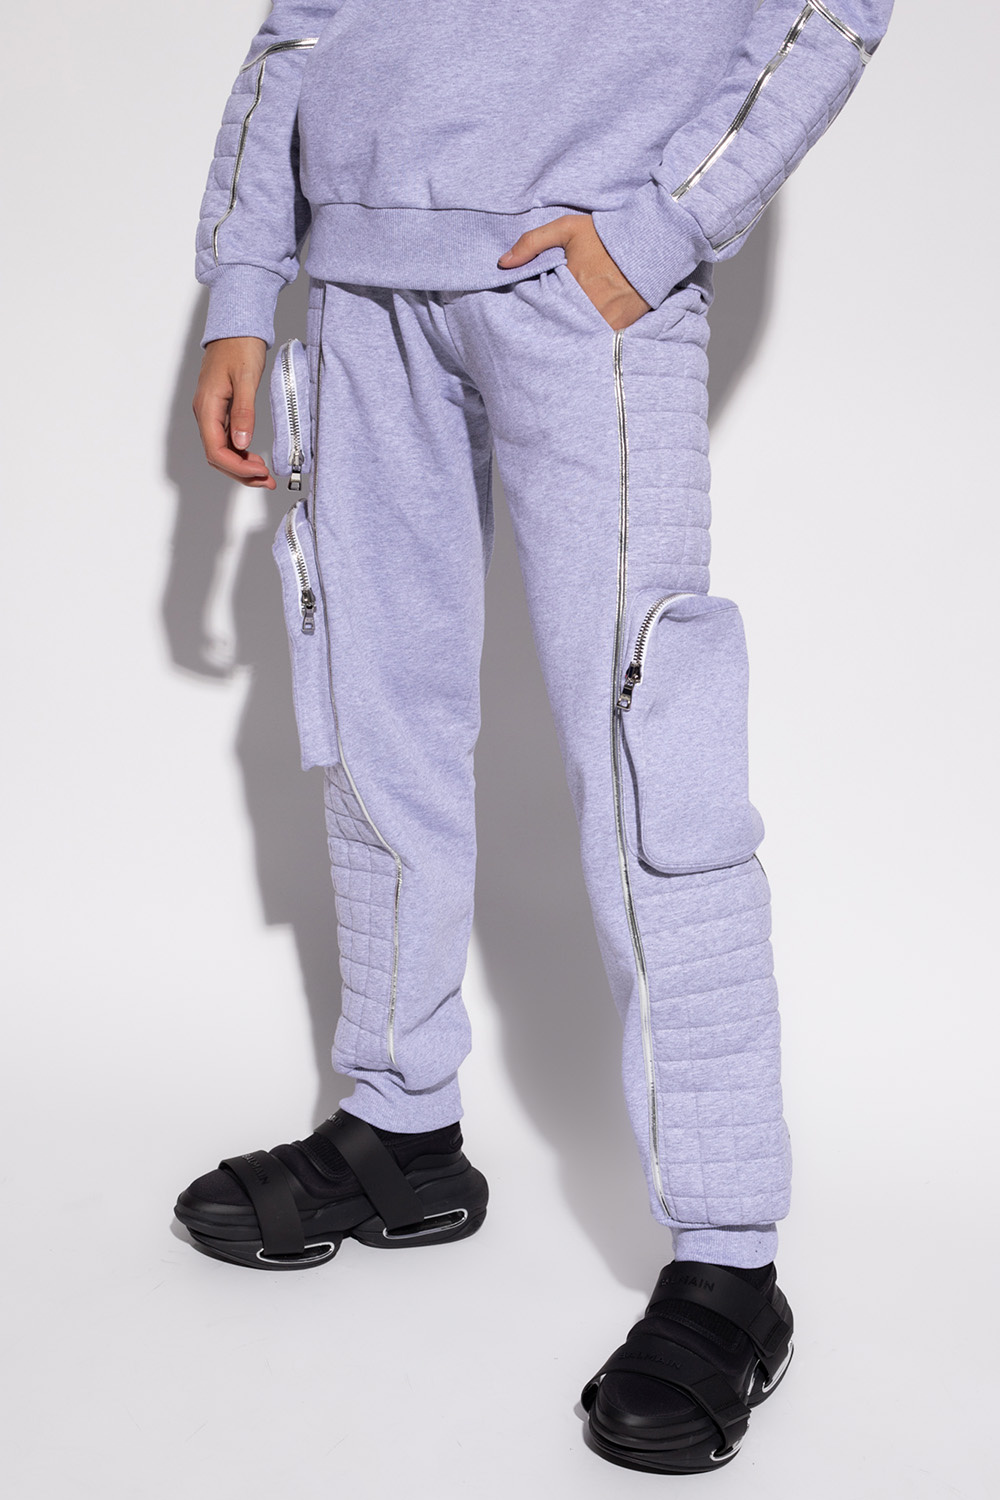 Balmain Sweatpants with pockets